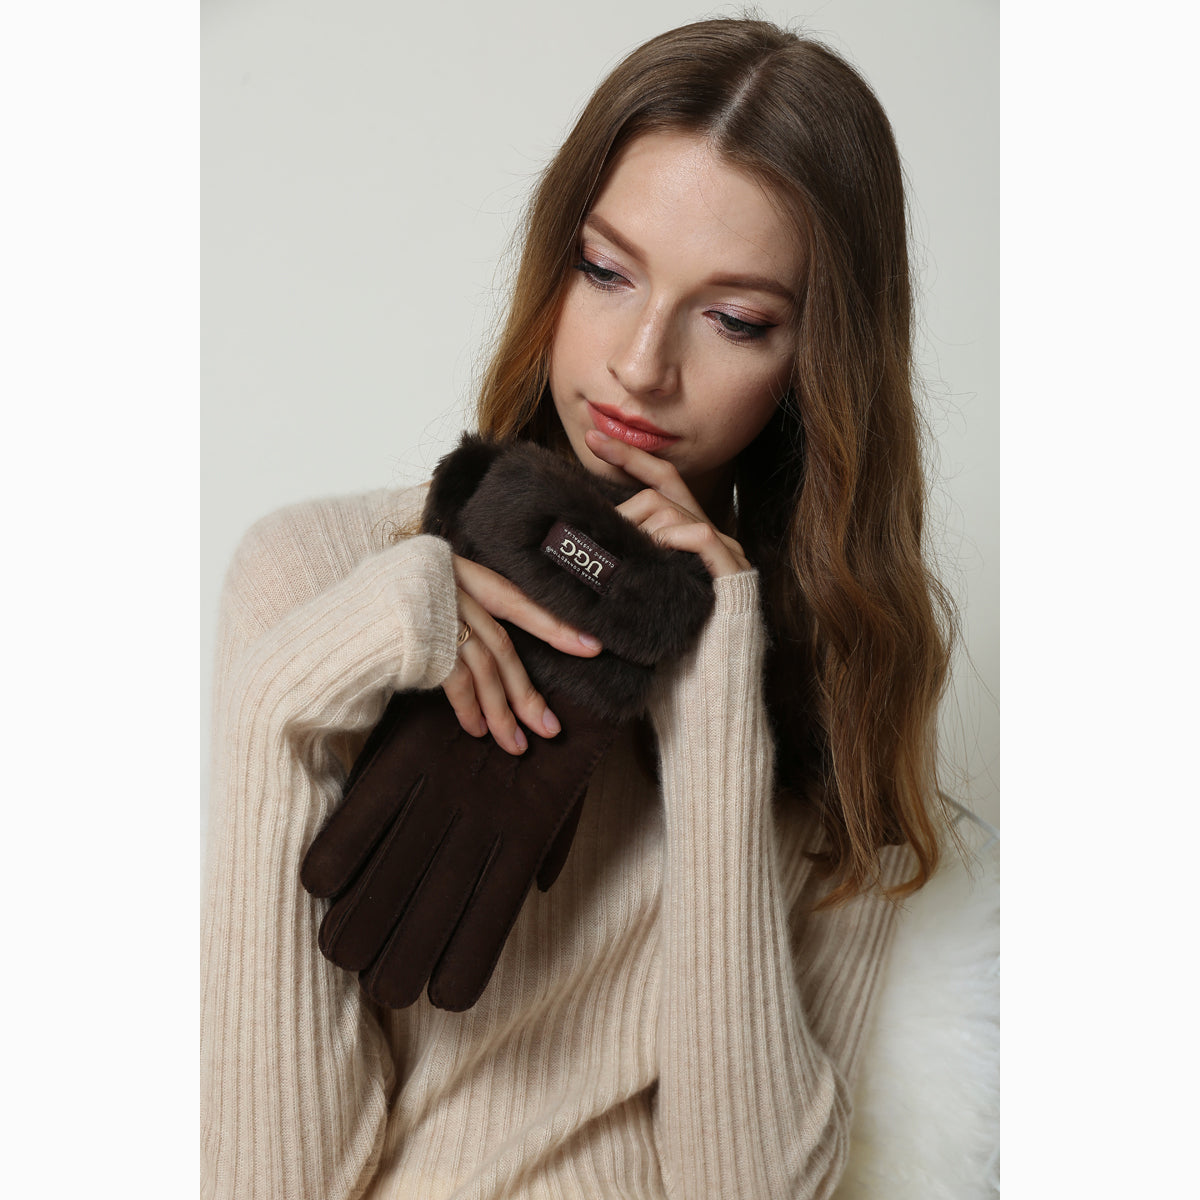 Ugg Sheepskin Double Cuff Glove-Gloves-PEROZ Accessories